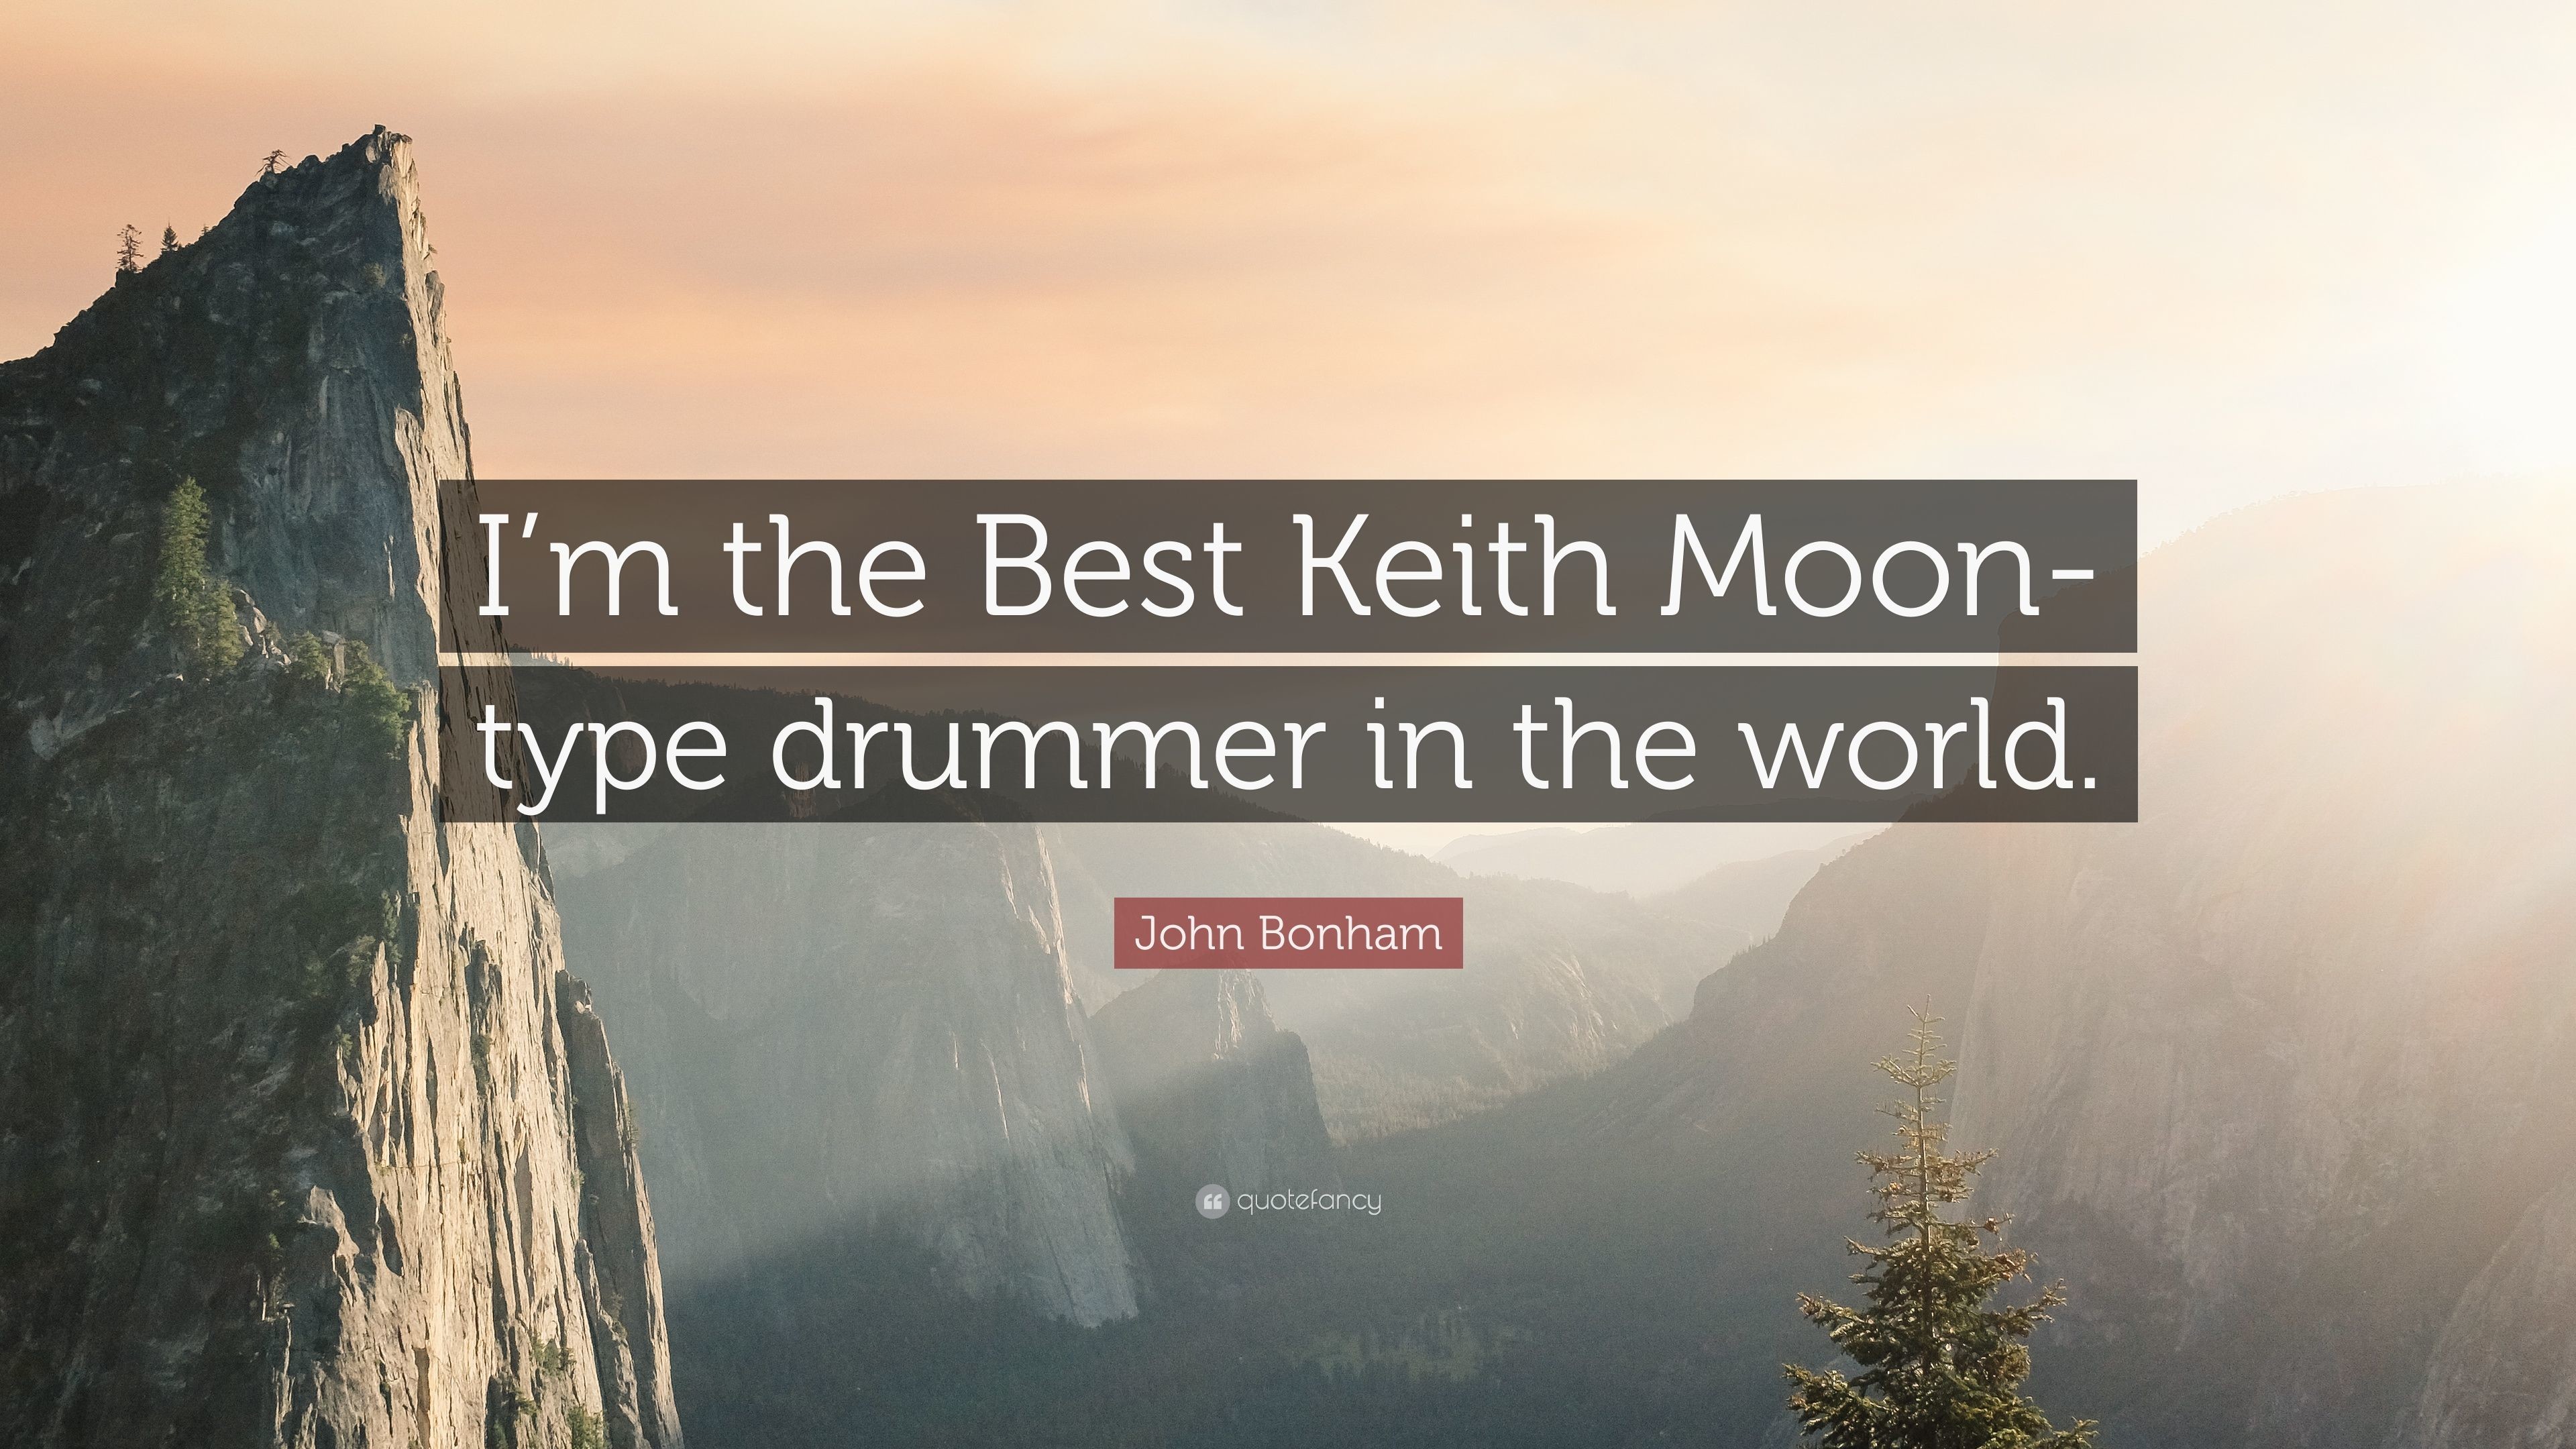 3840x2160 John Bonham Quote: “I'm the Best Keith Moon-type drummer in